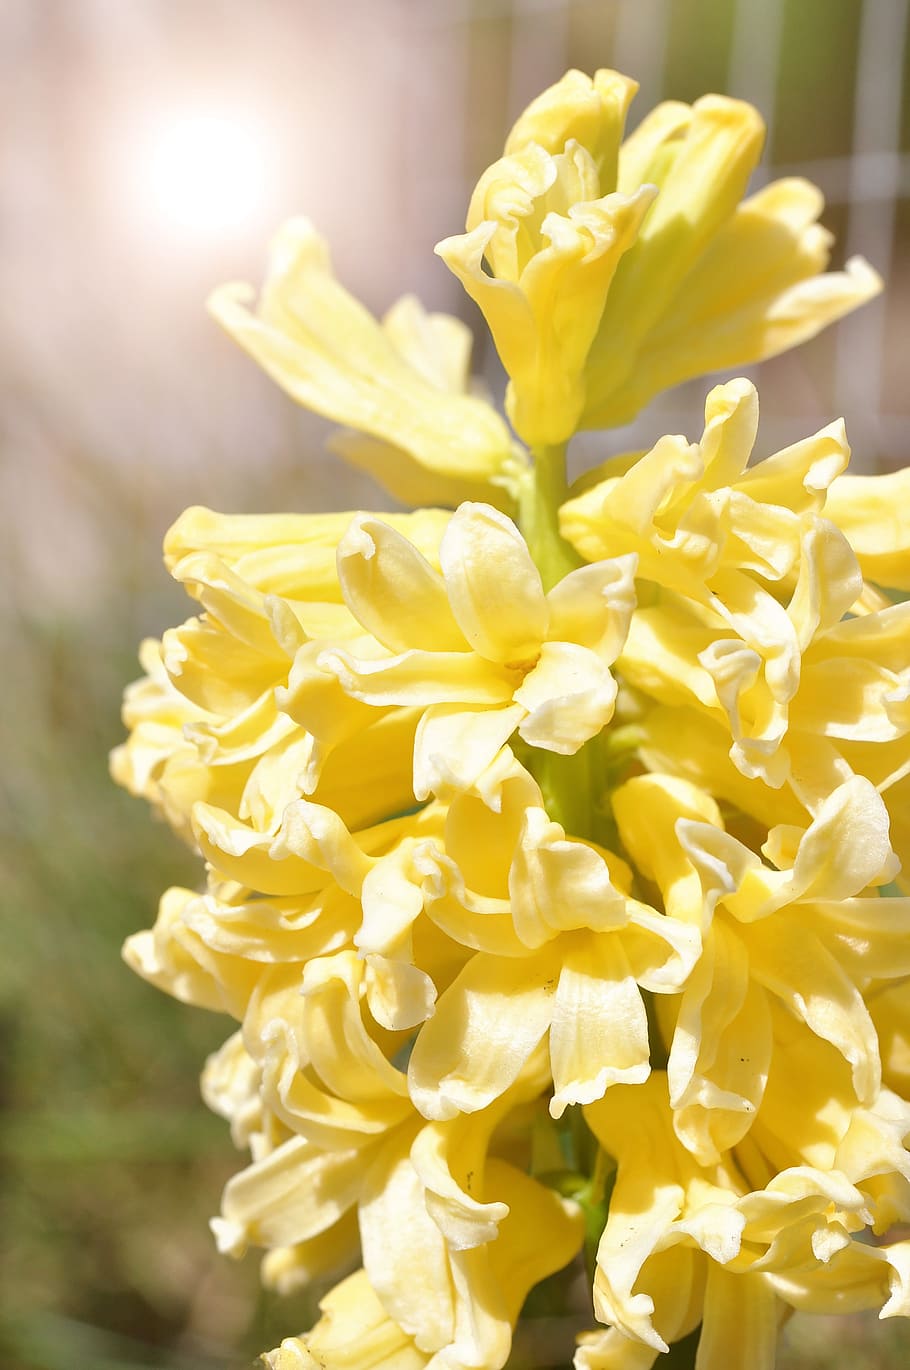 Hyacinth, Kuning, Bunga, Taman, bunga musim semi, kesalahan besar awal, musim semi, cahaya, sinar matahari, dekat